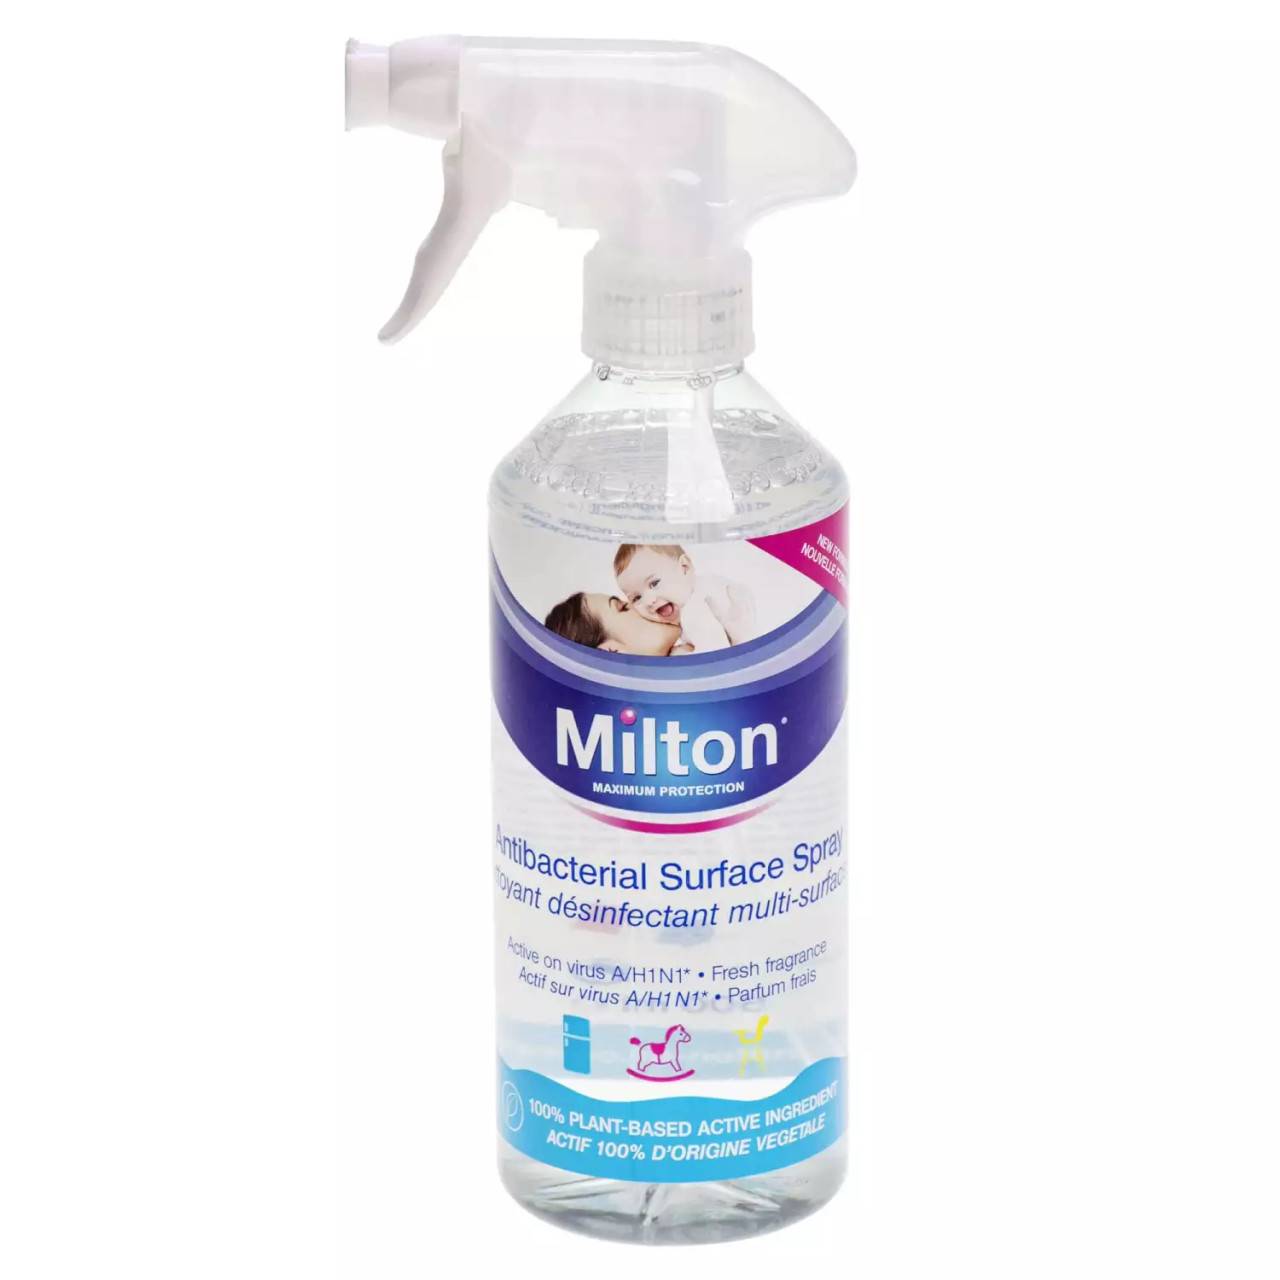 Milton - Milton Antibacterial Surface Spray 500ml - MIL0021 UKMEDI.CO.UK UK Medical Supplies